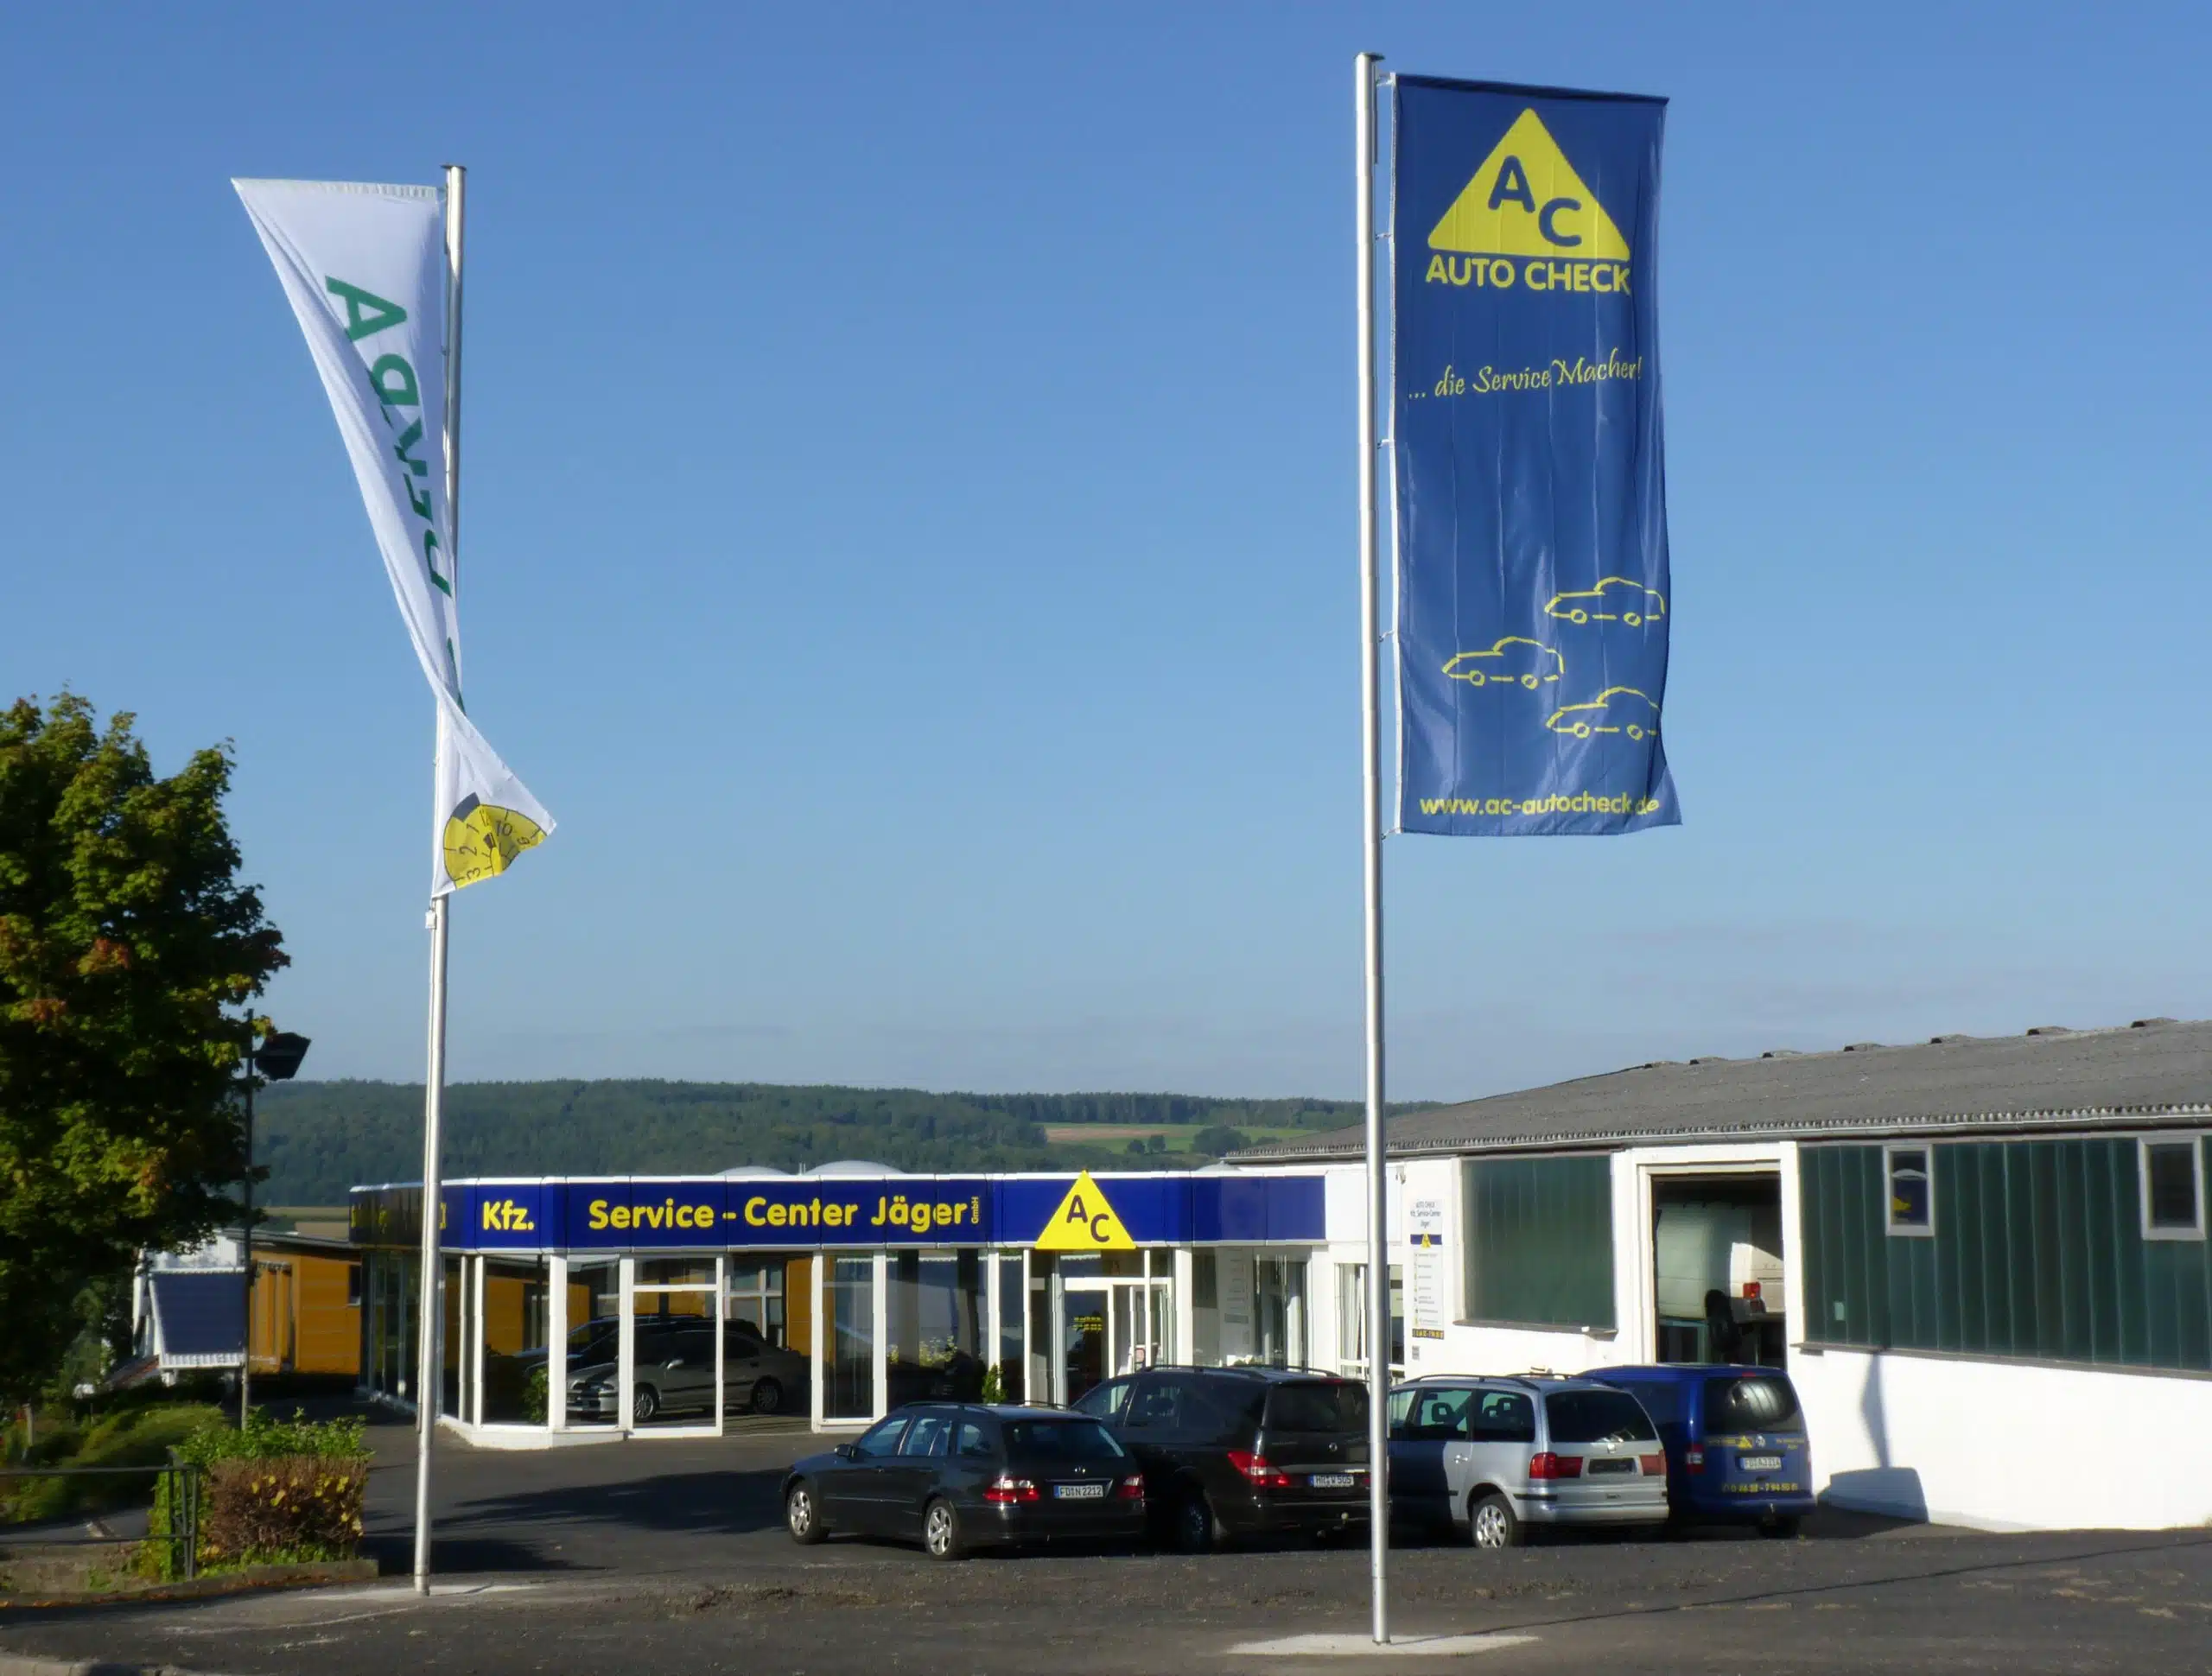 Kfz. Service-Center Jäger GmbH